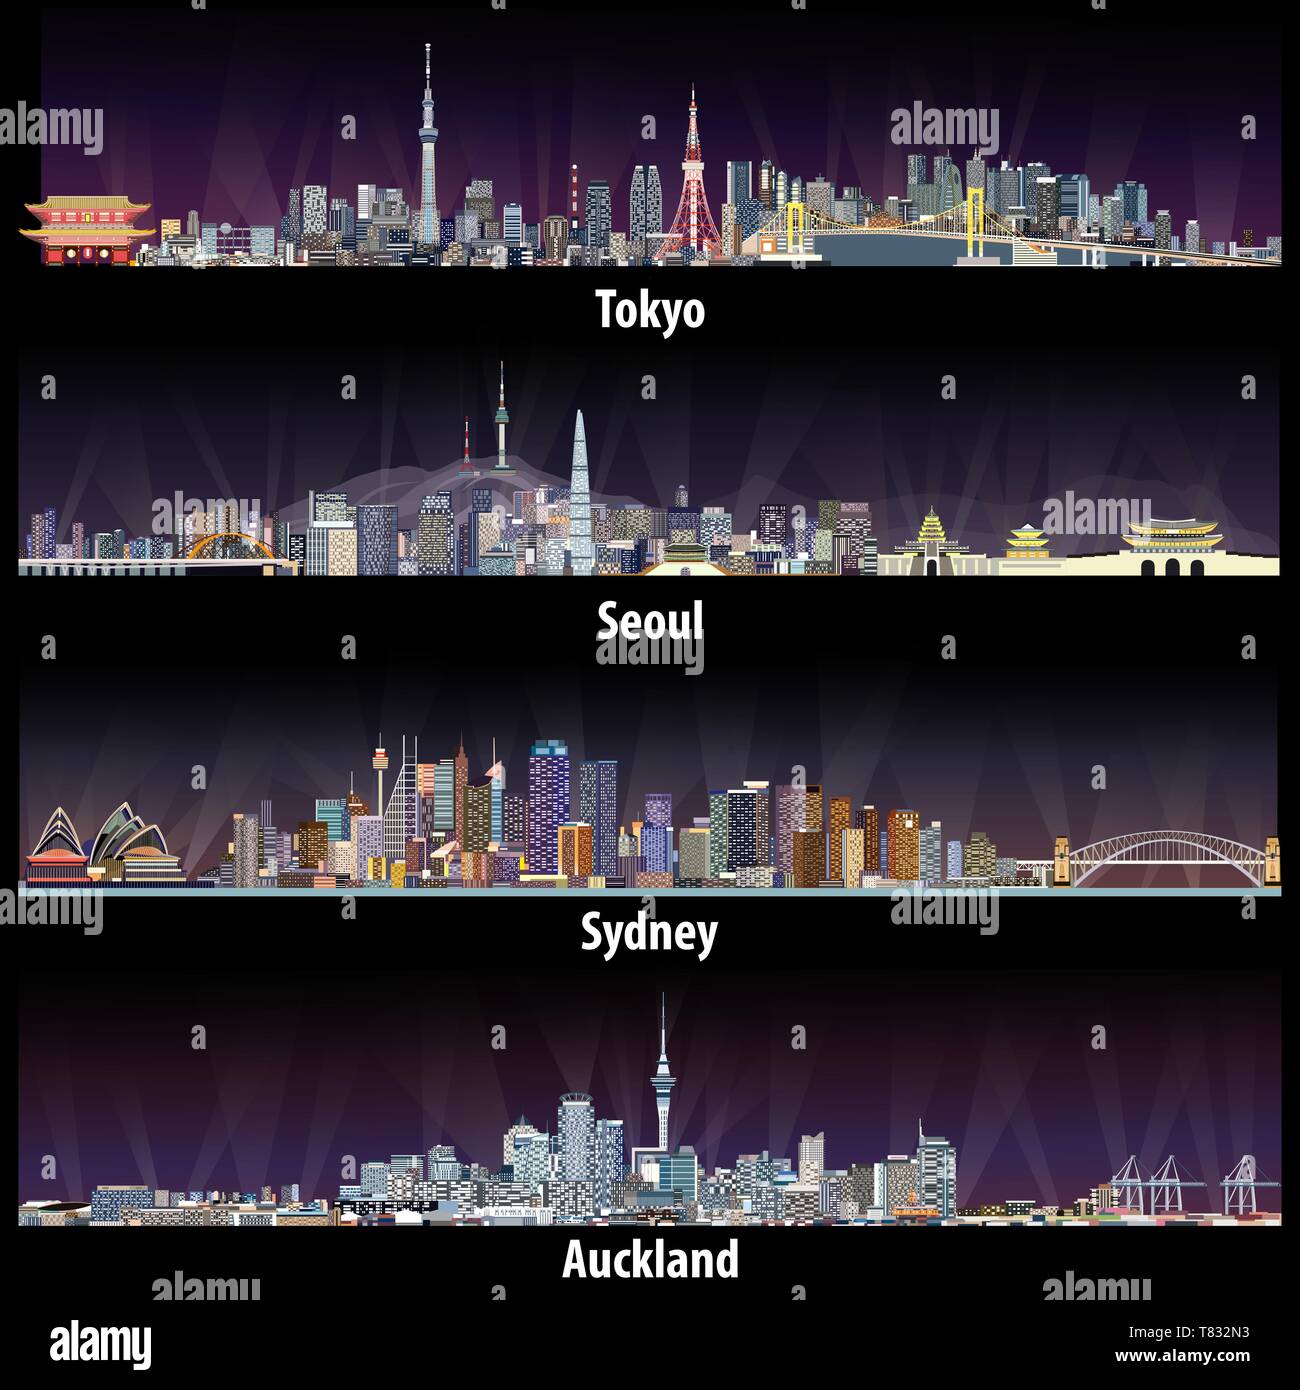 Vektorgrafiken in Tokio, Seoul, Sydney und Auckland Skyline Stock Vektor